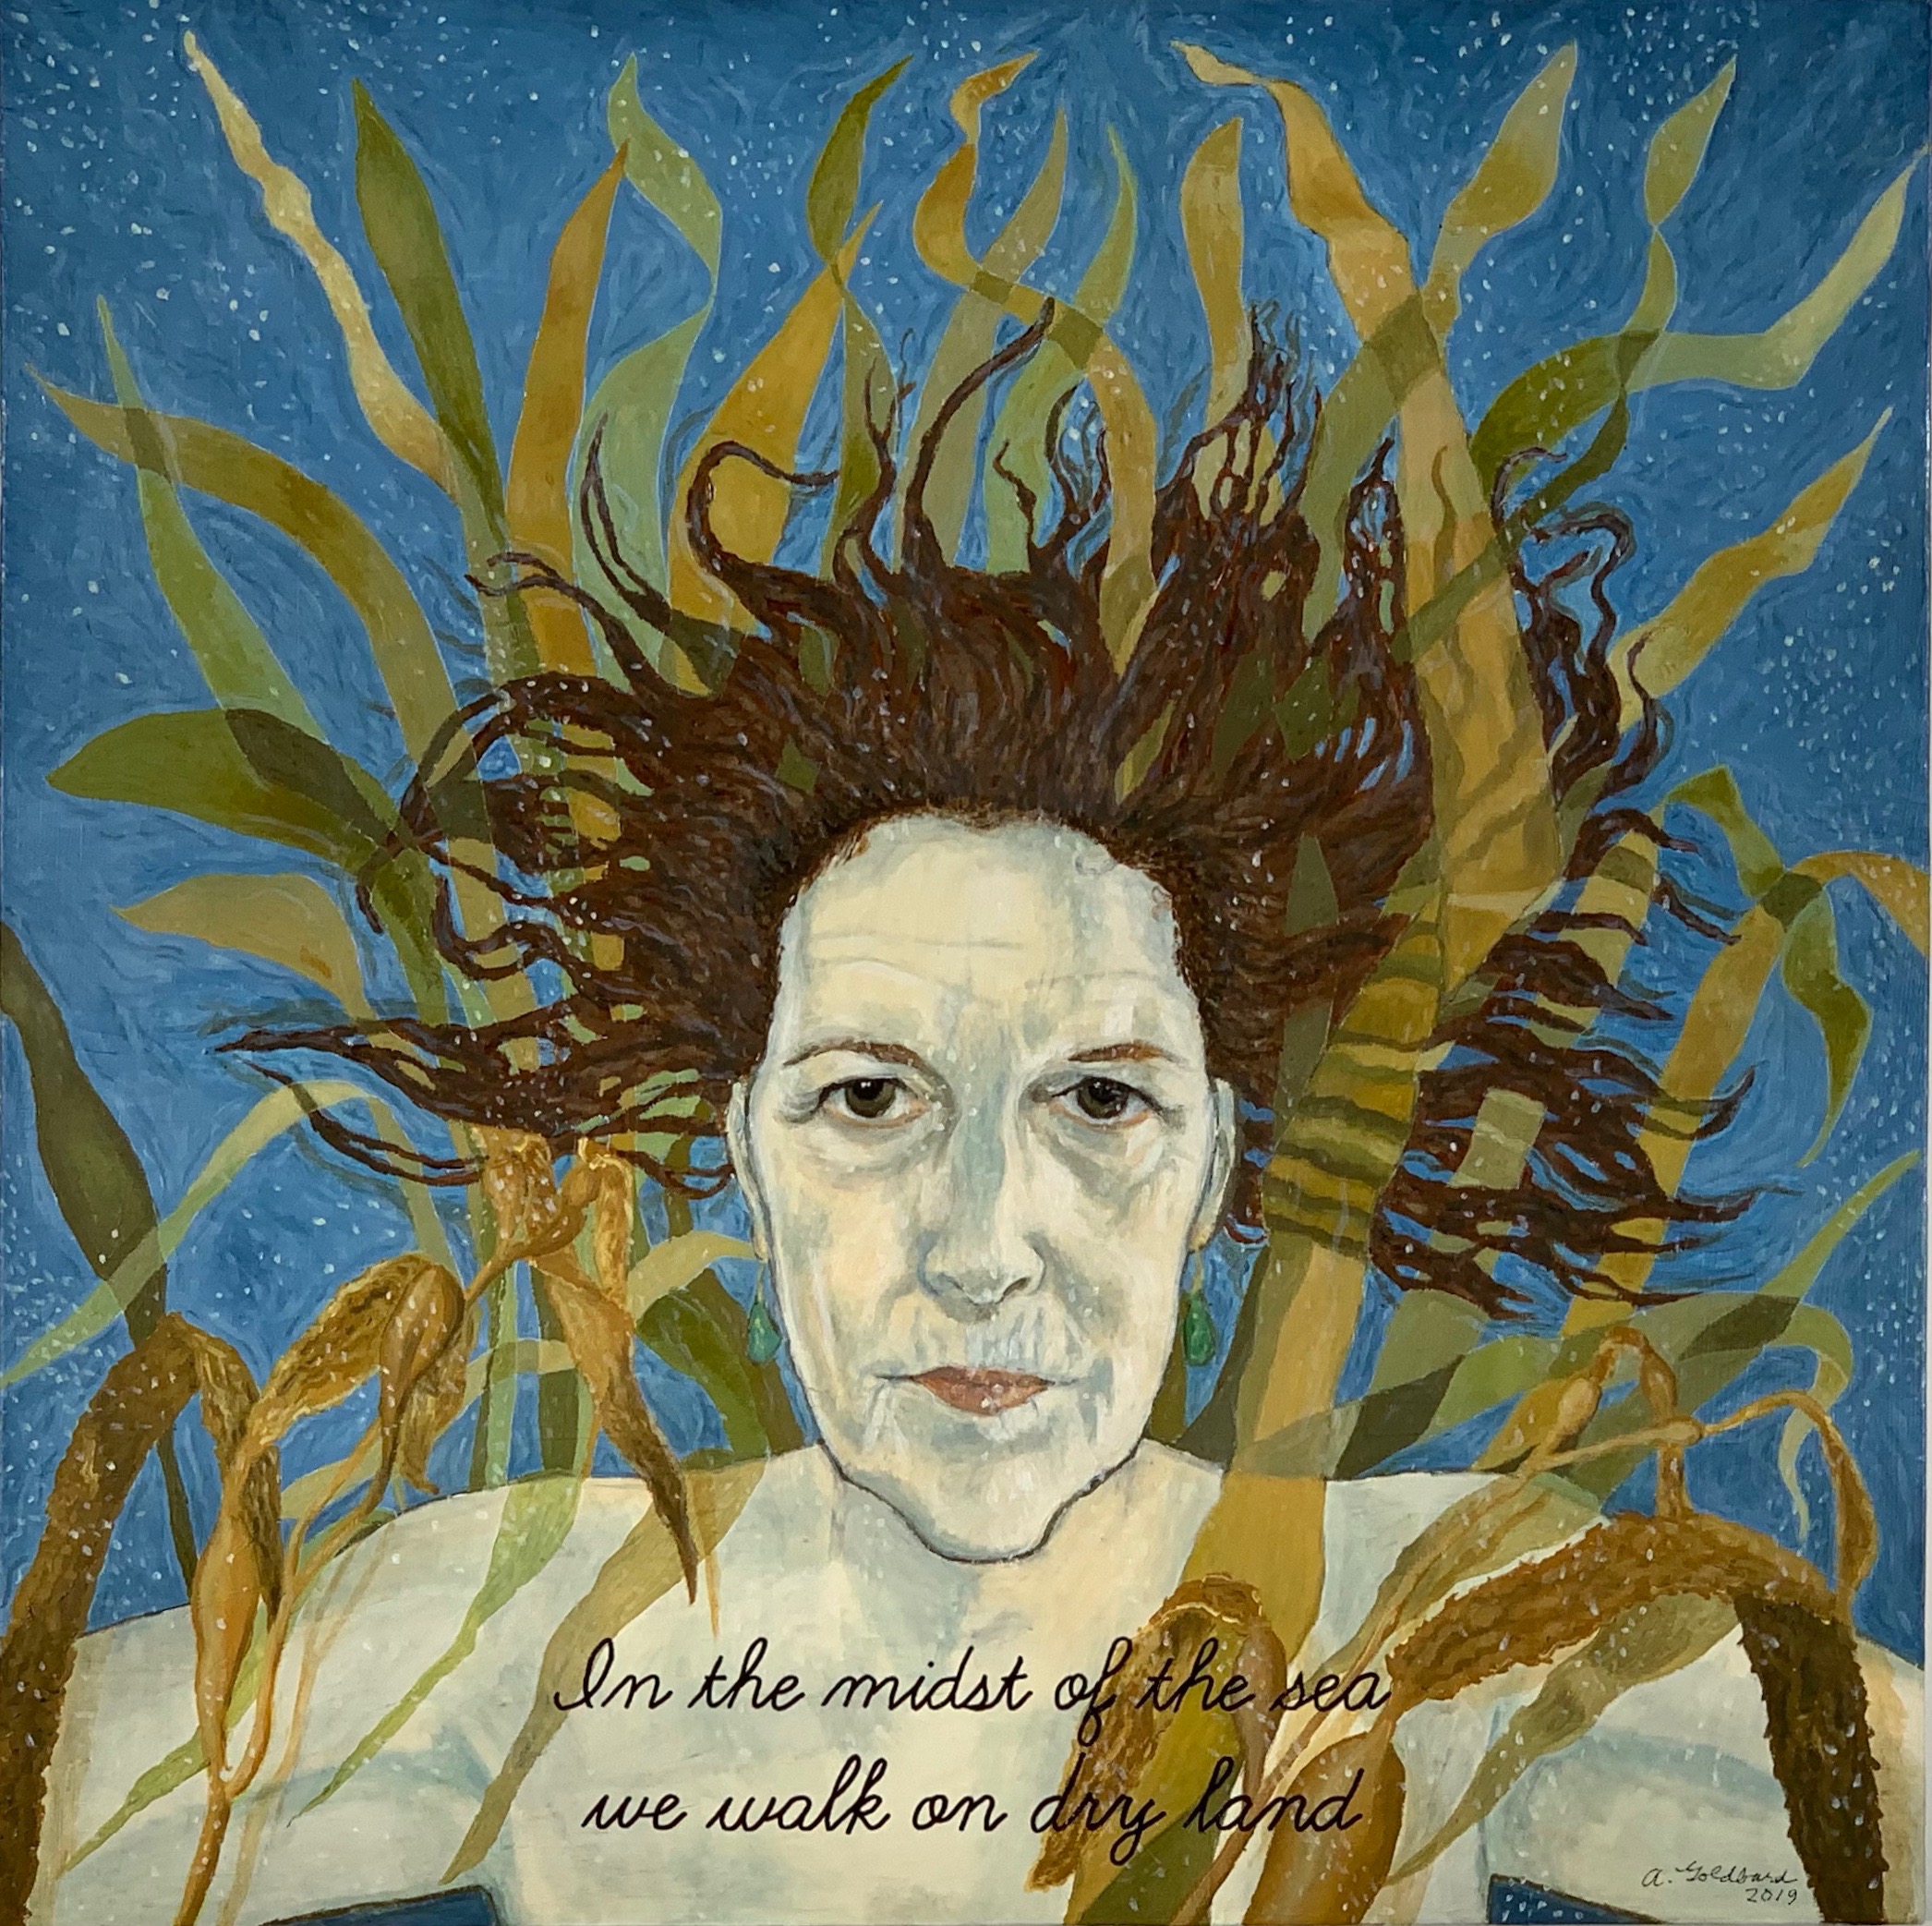 Self-portrait underwater 2019, oil on panel, 24x24